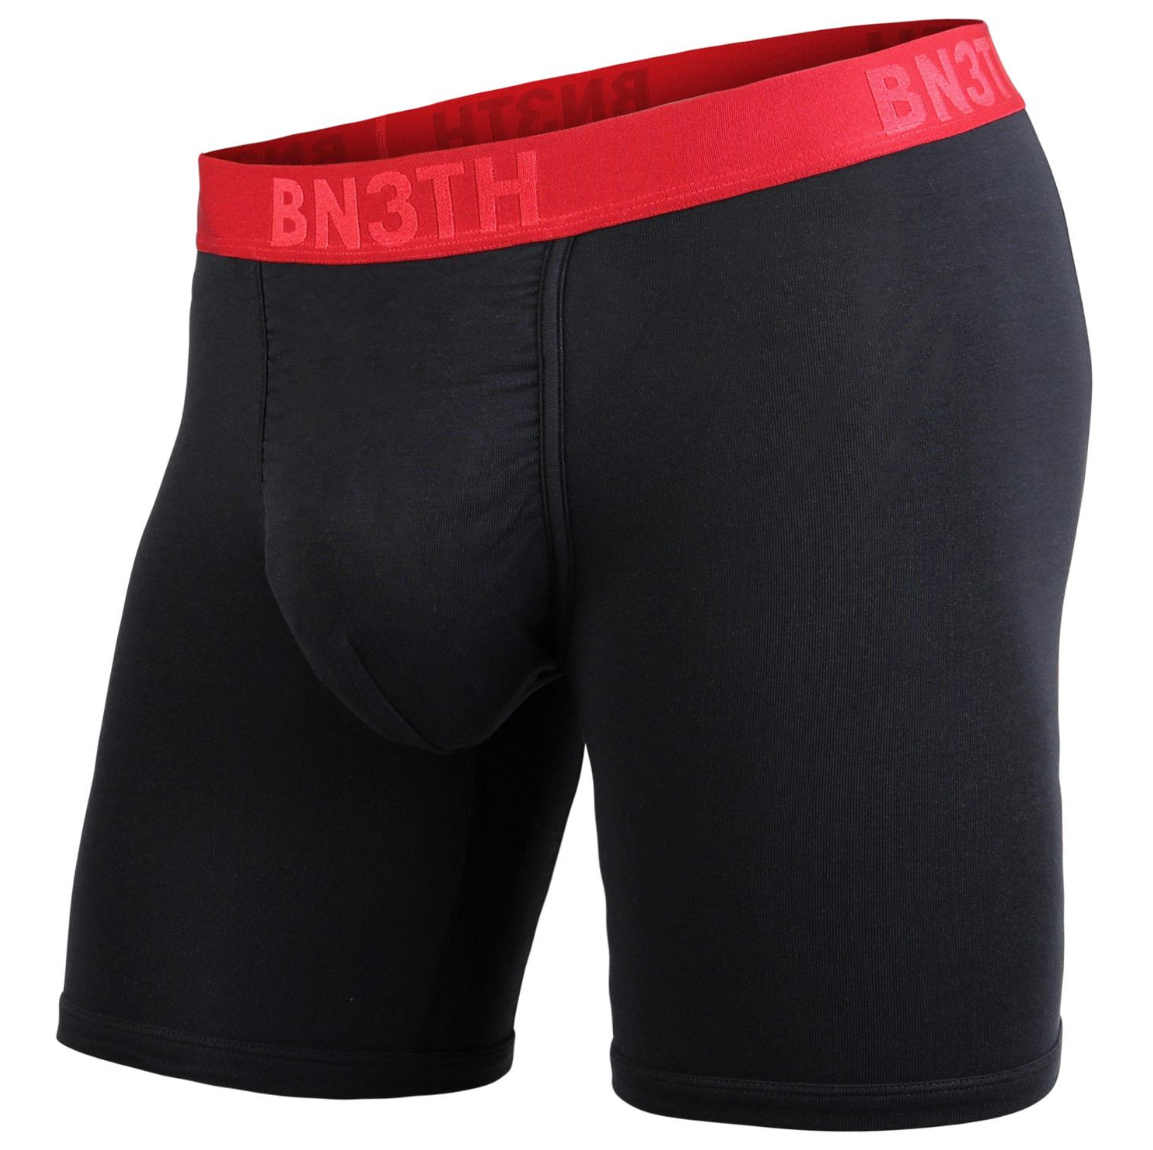 BN3TH 6.5" Classic Boxer Brief - Black/Crimson